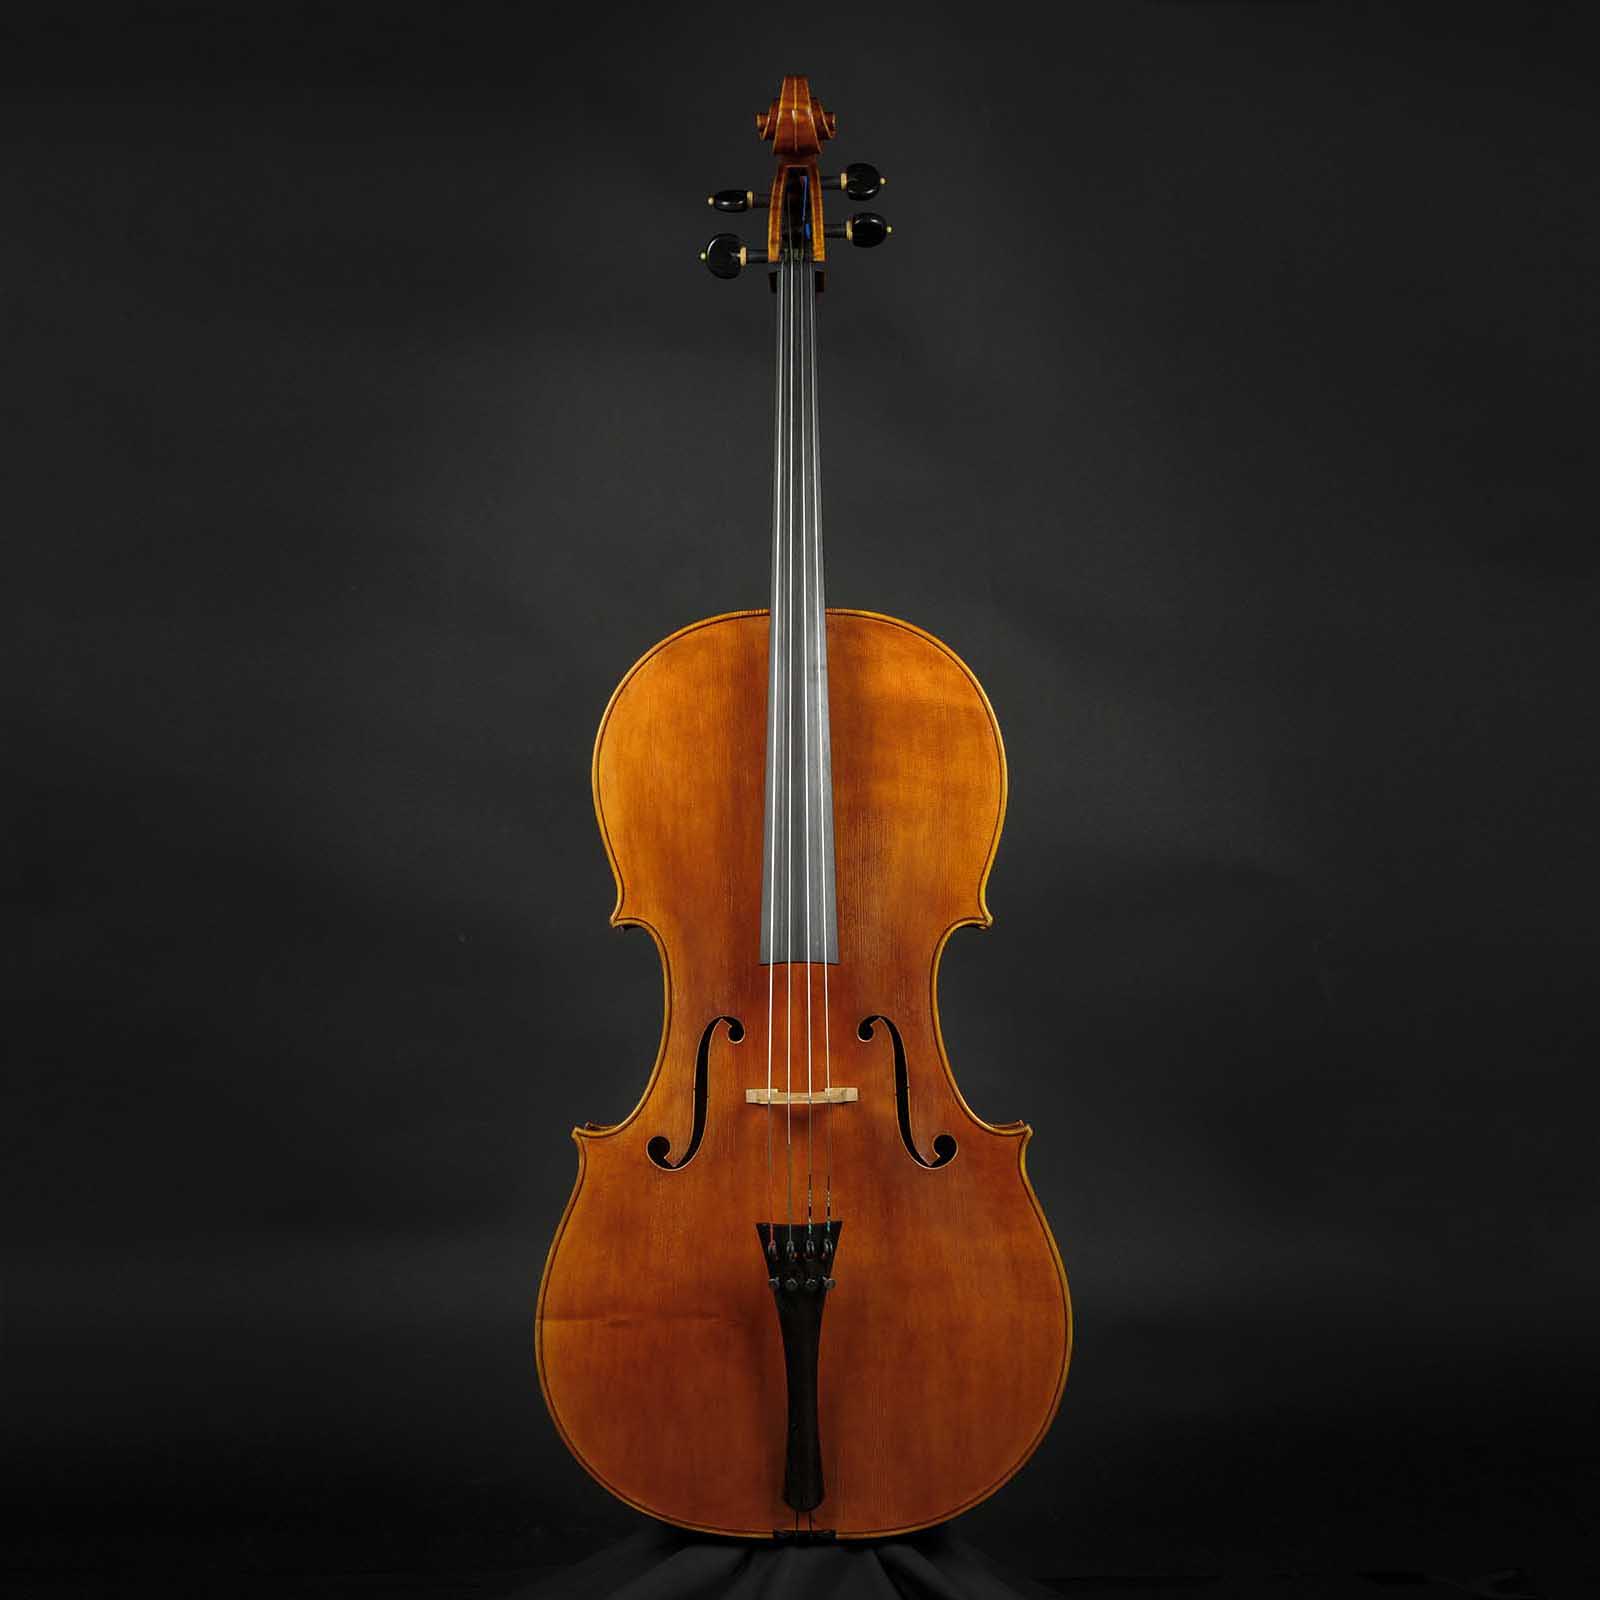 Antonio Stradivari Cremona 1712 “Davidoff“ - Image 1